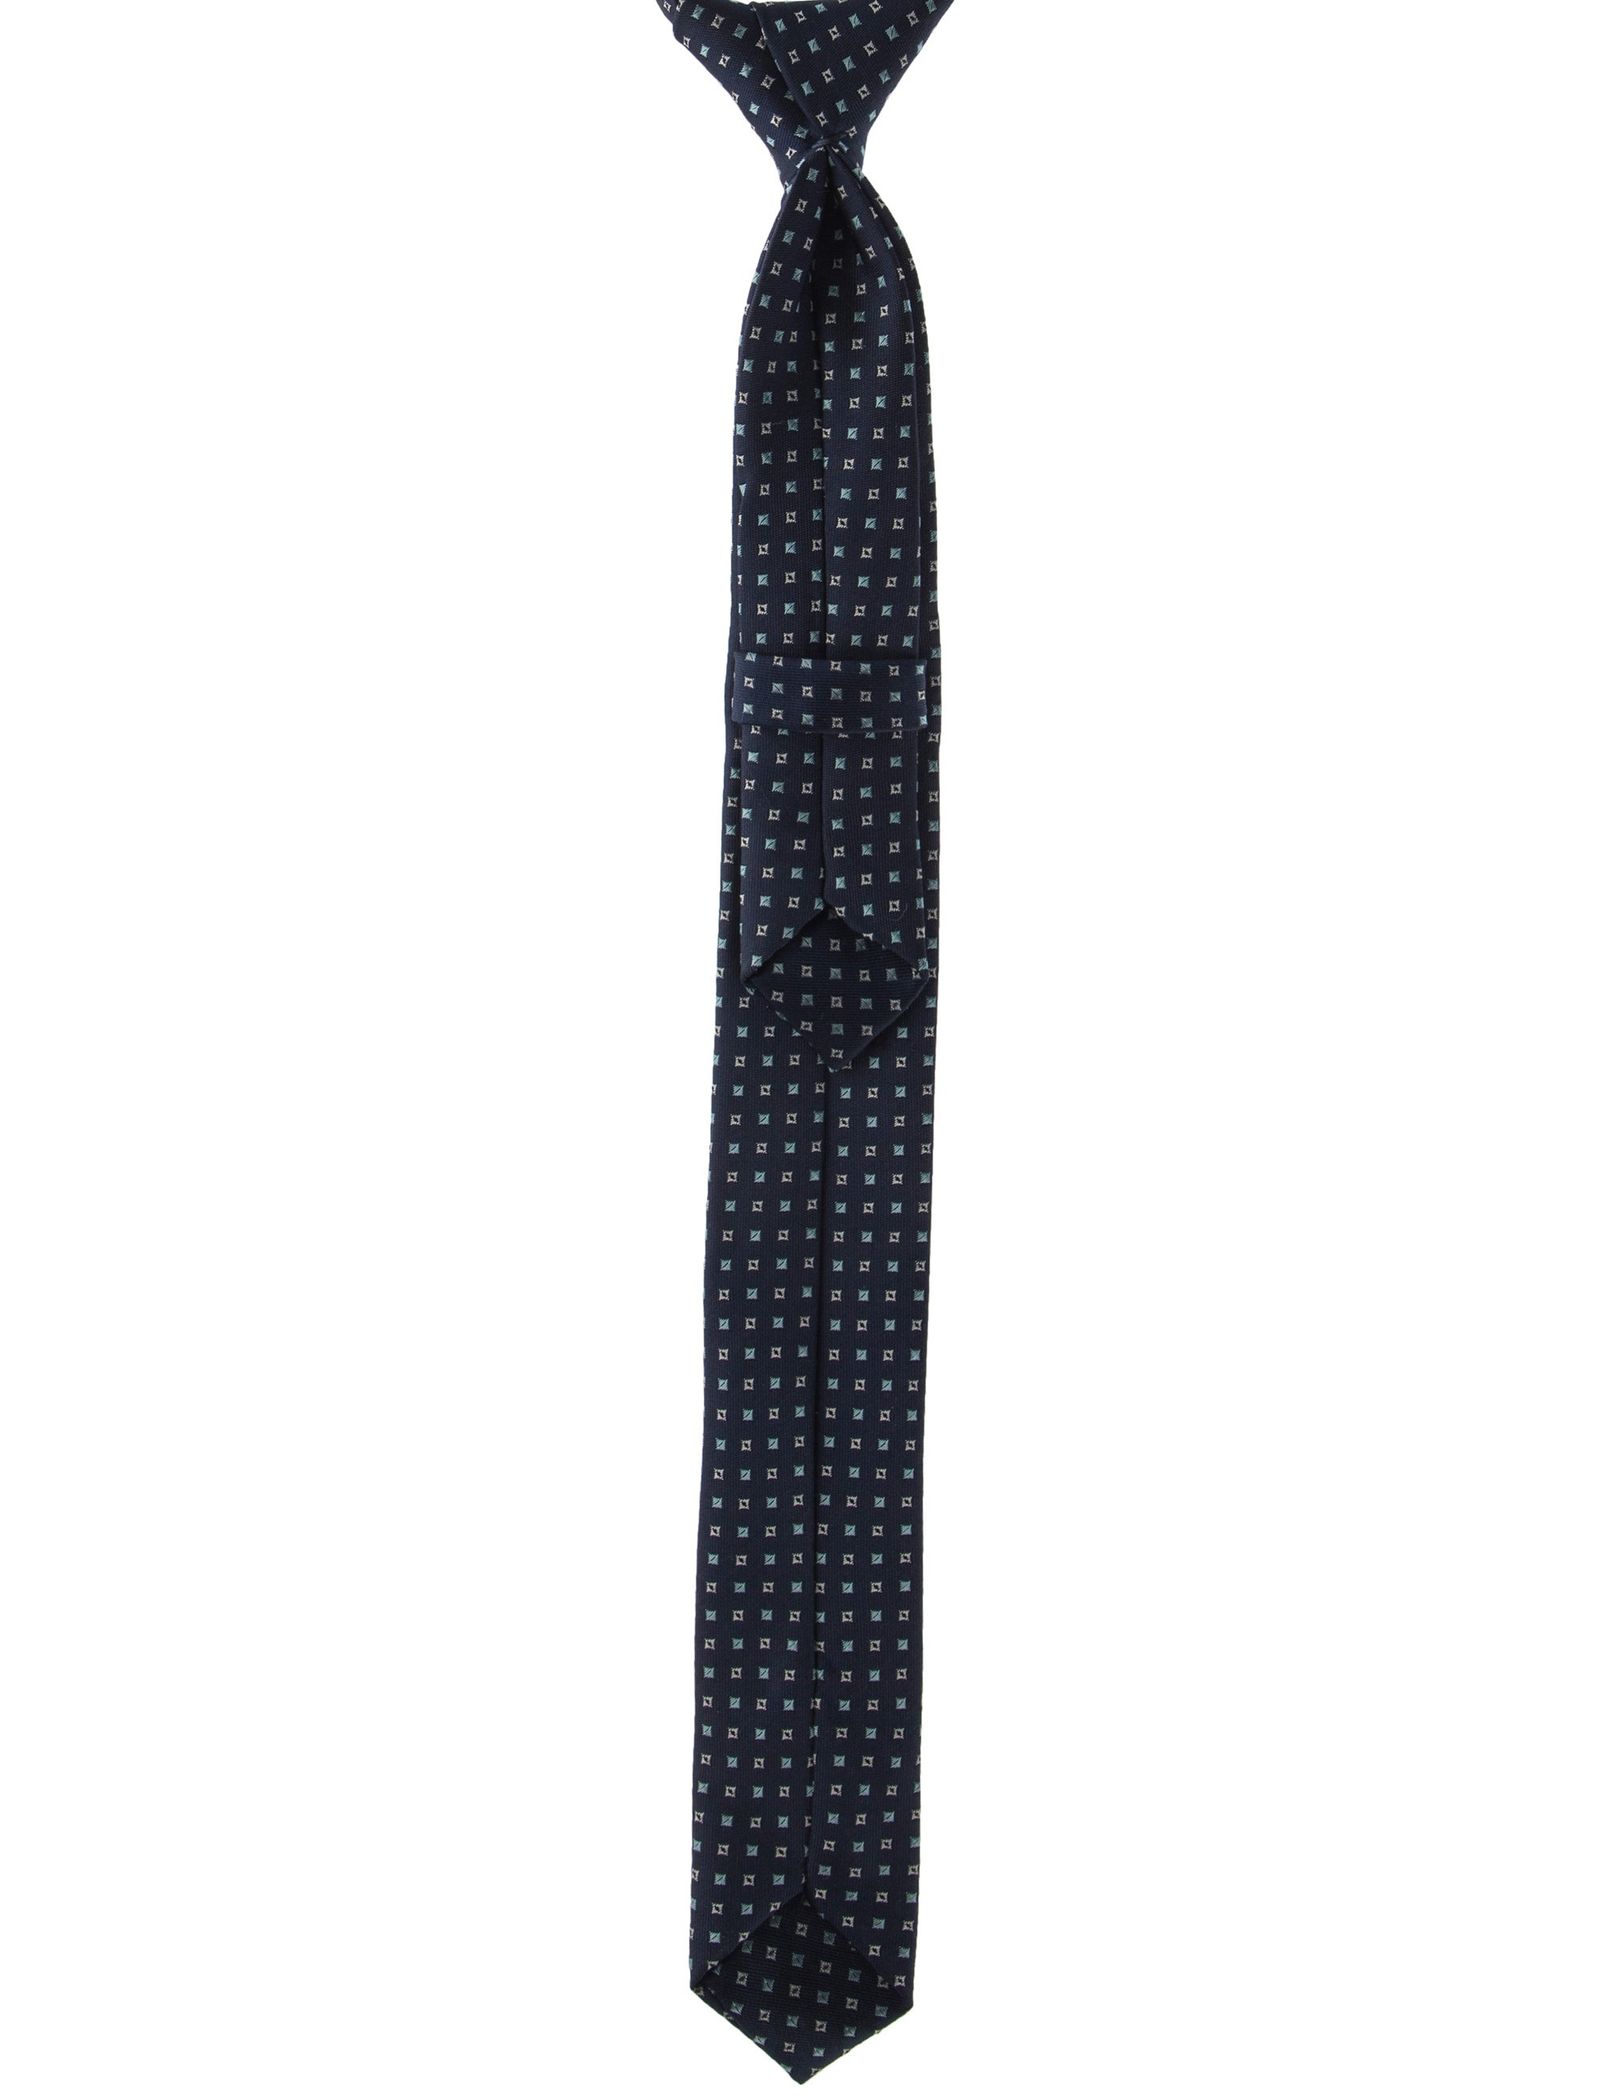 کراوات طرح دار پسرانه - بلوکیدز تک سایز - آبي - 4